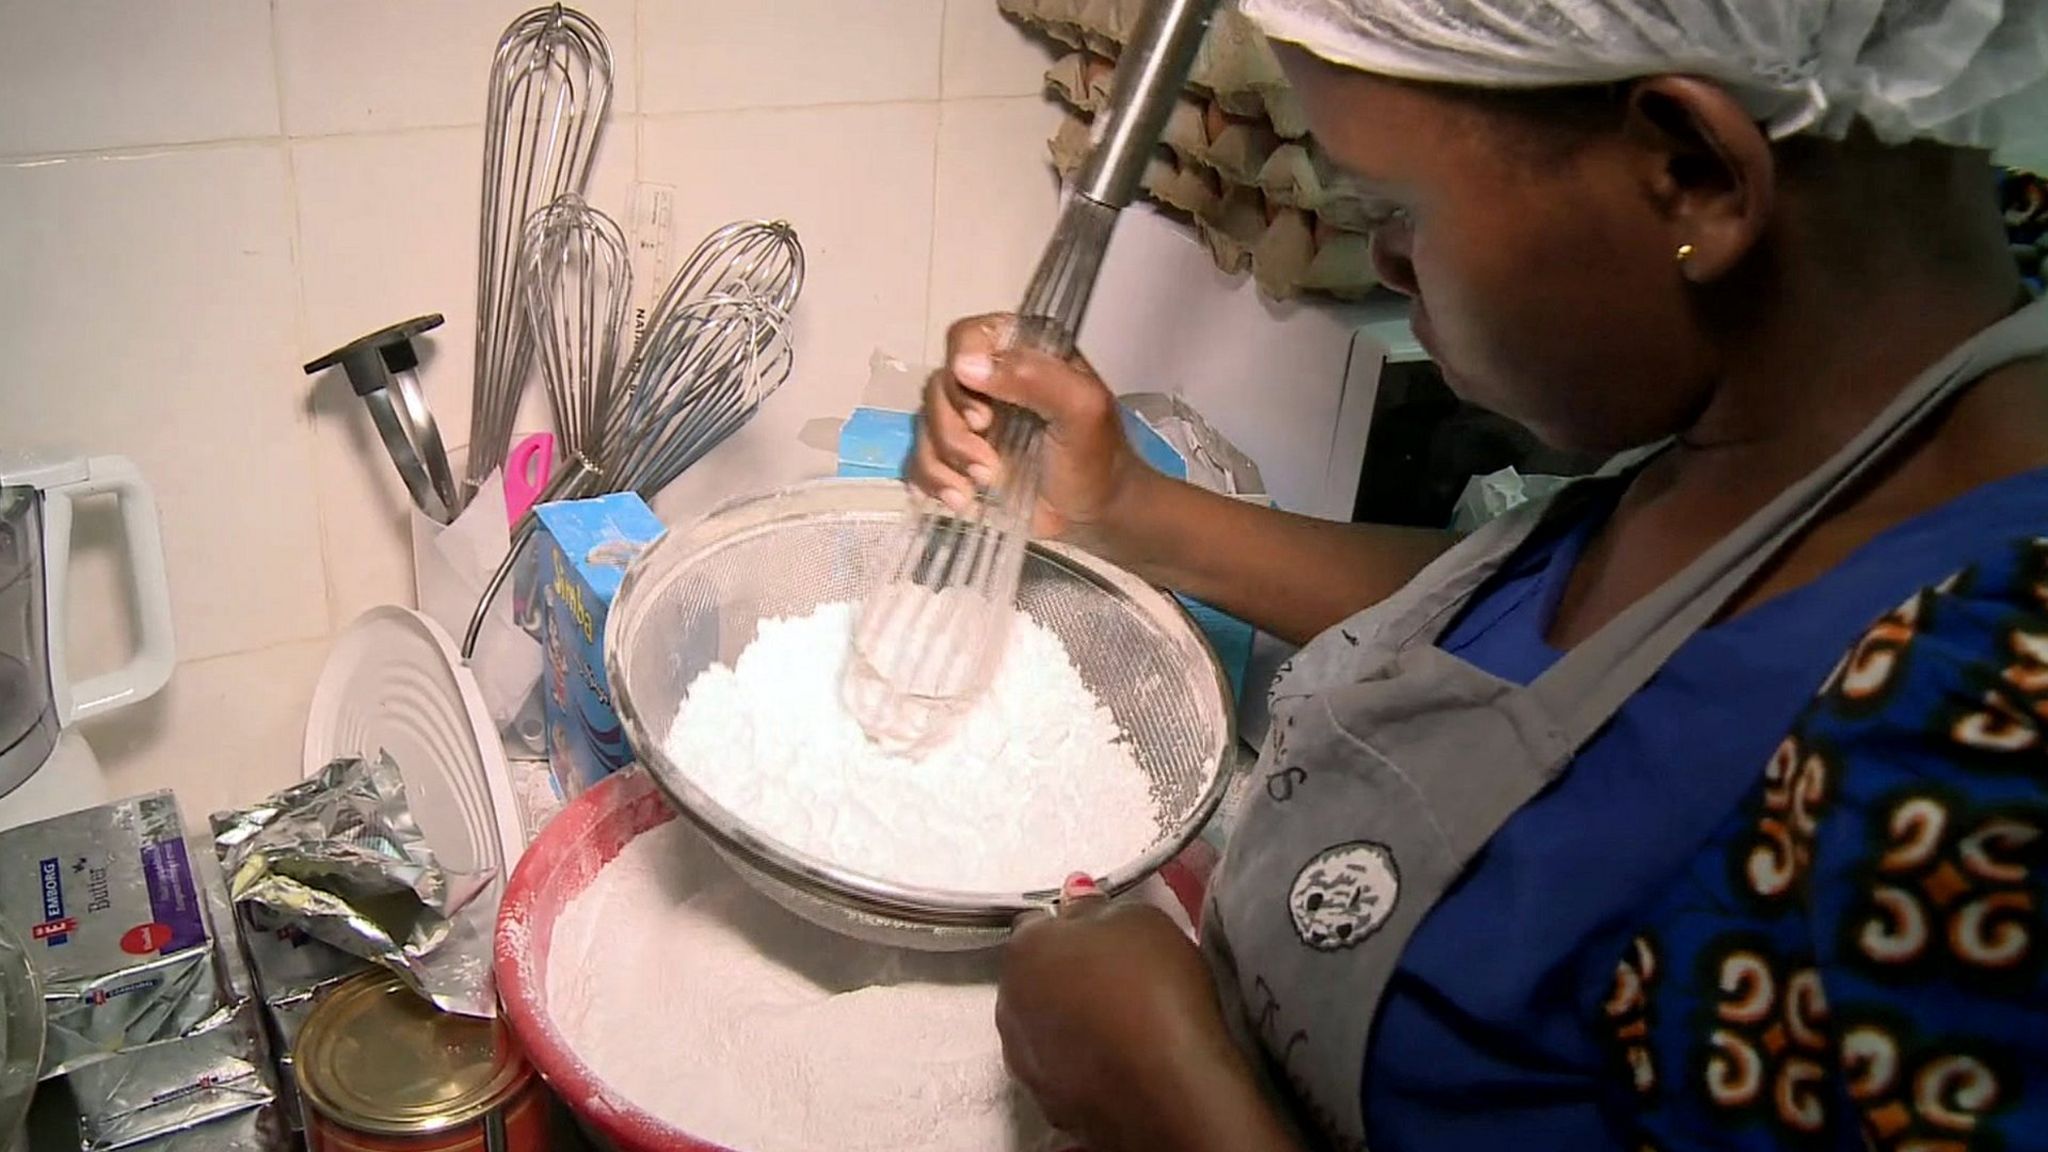 woman sieving sugar in bowl